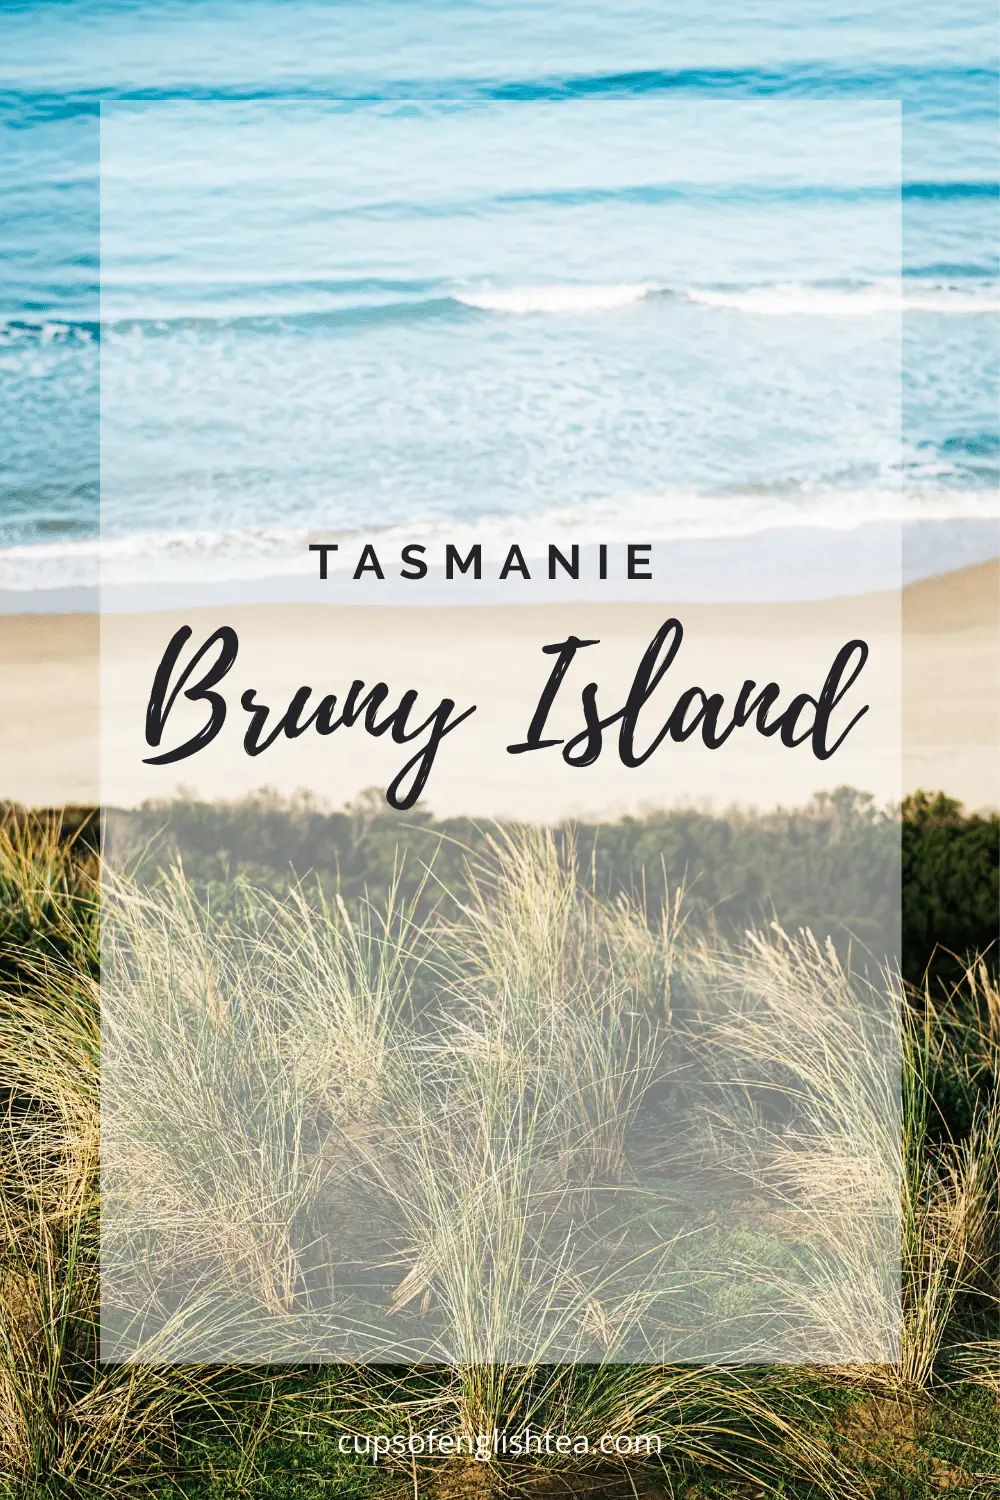 Bruny Island Tasmanie